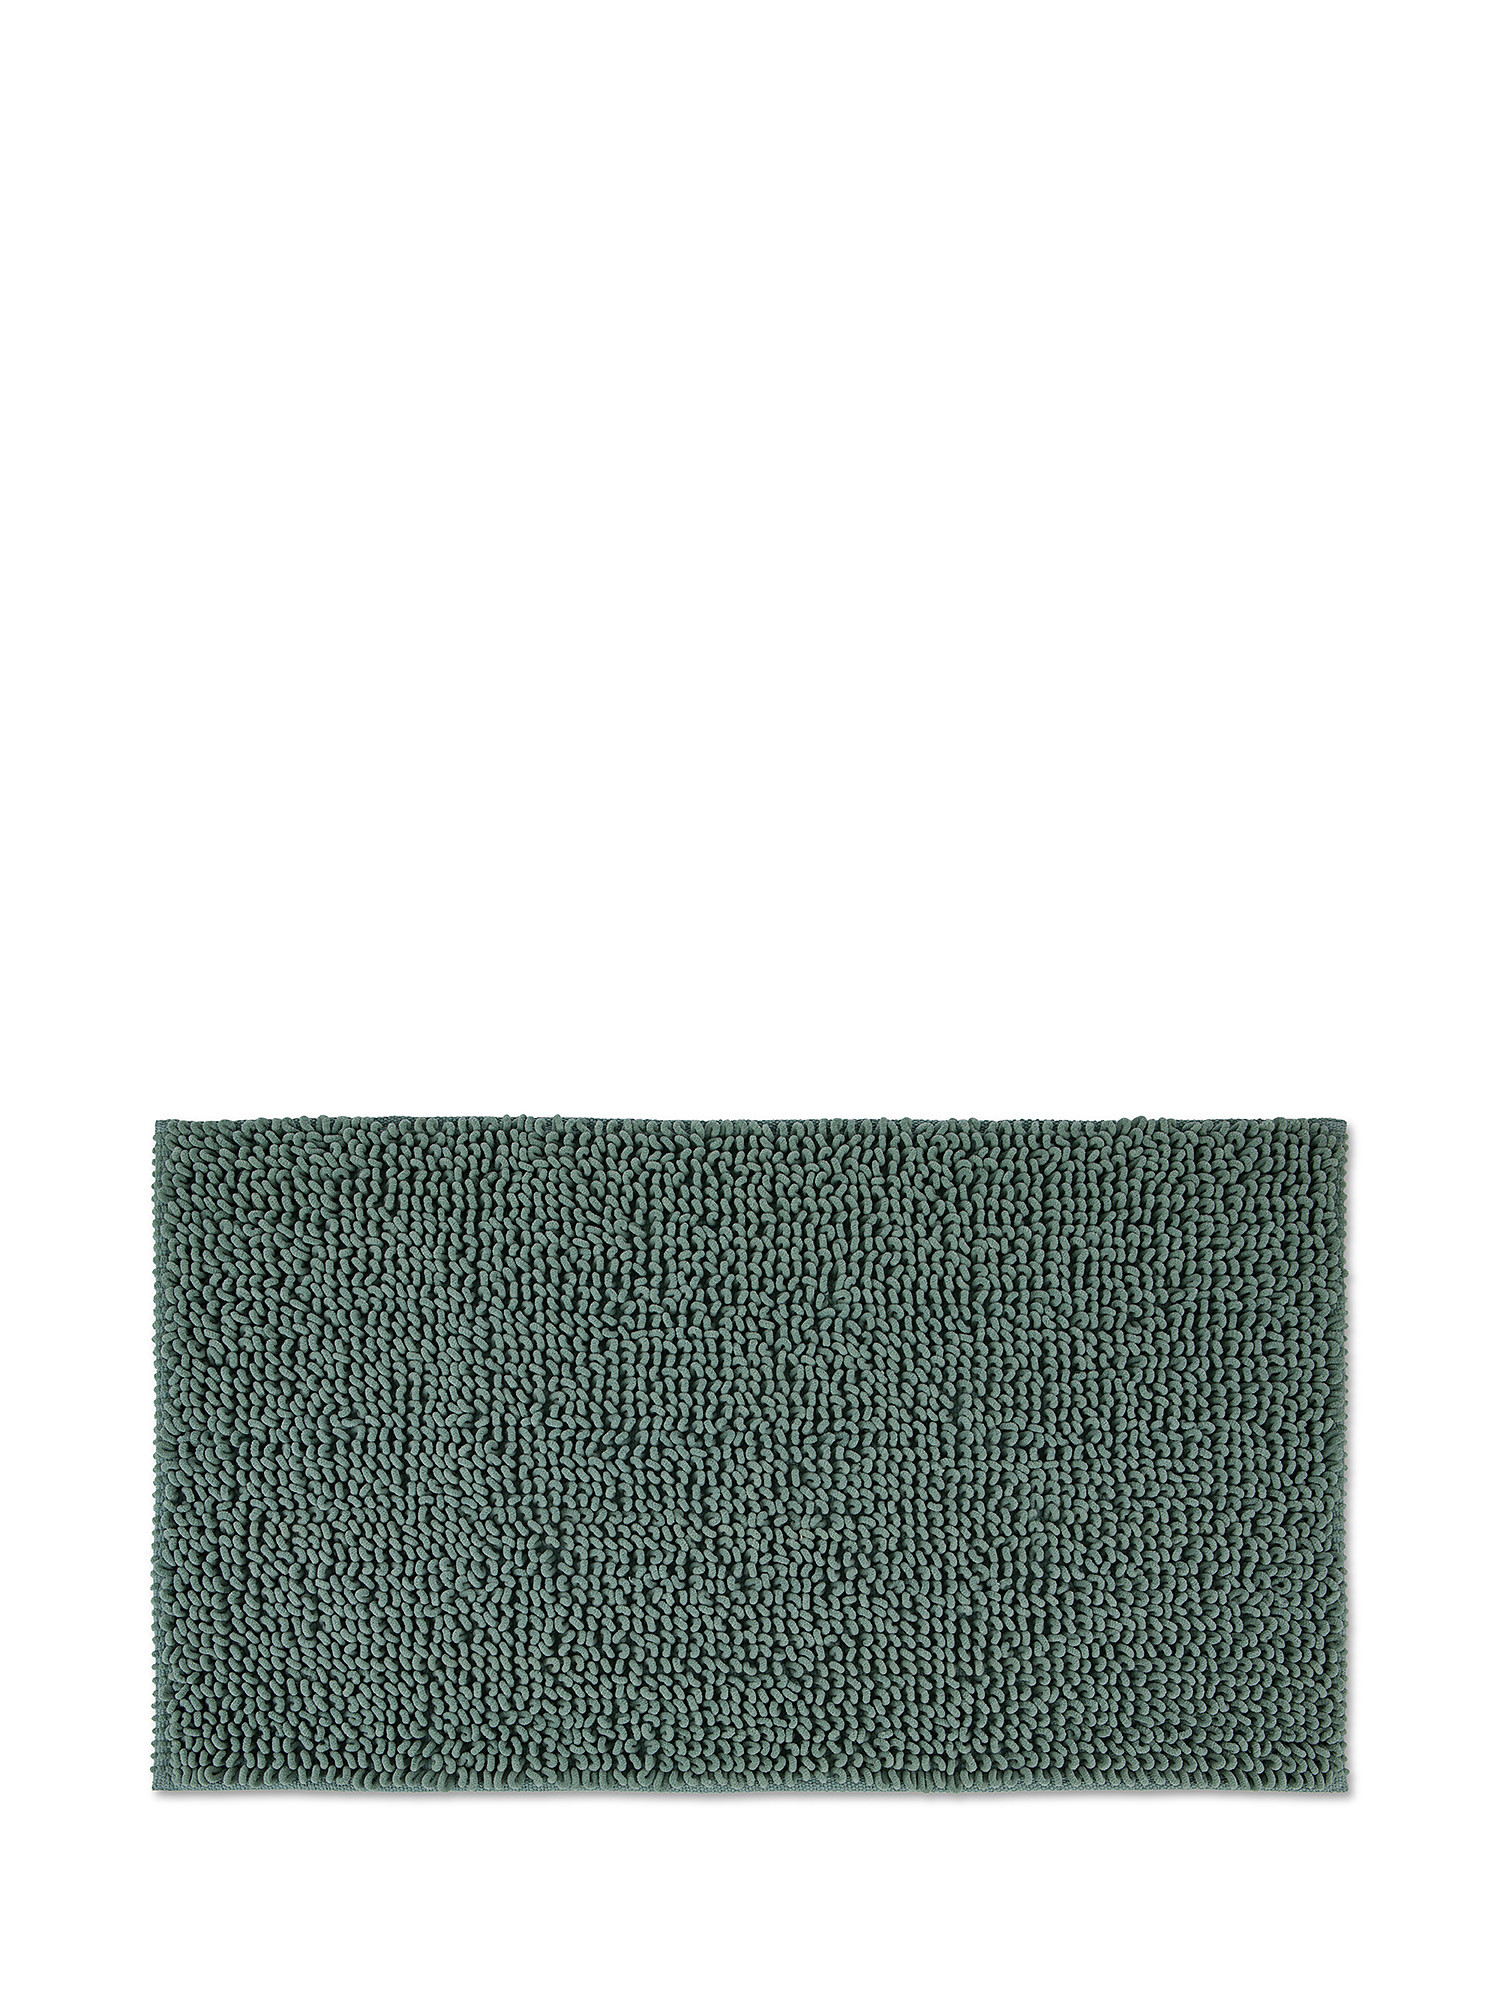 Shaggy microfiber bath mat, Light Green, large image number 0